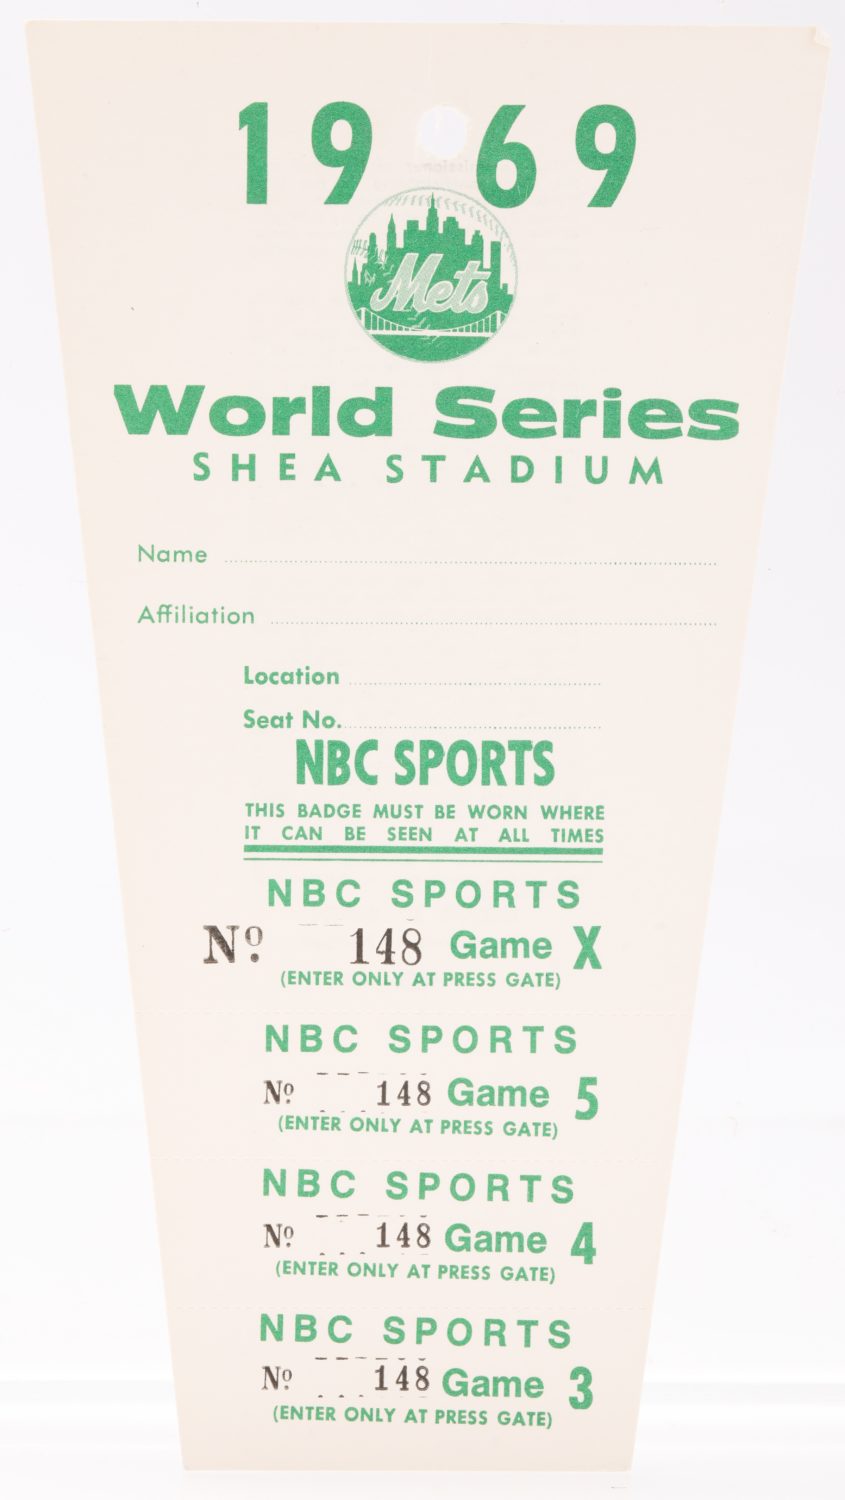 1969 World Series Press Pass at Shea Stadium